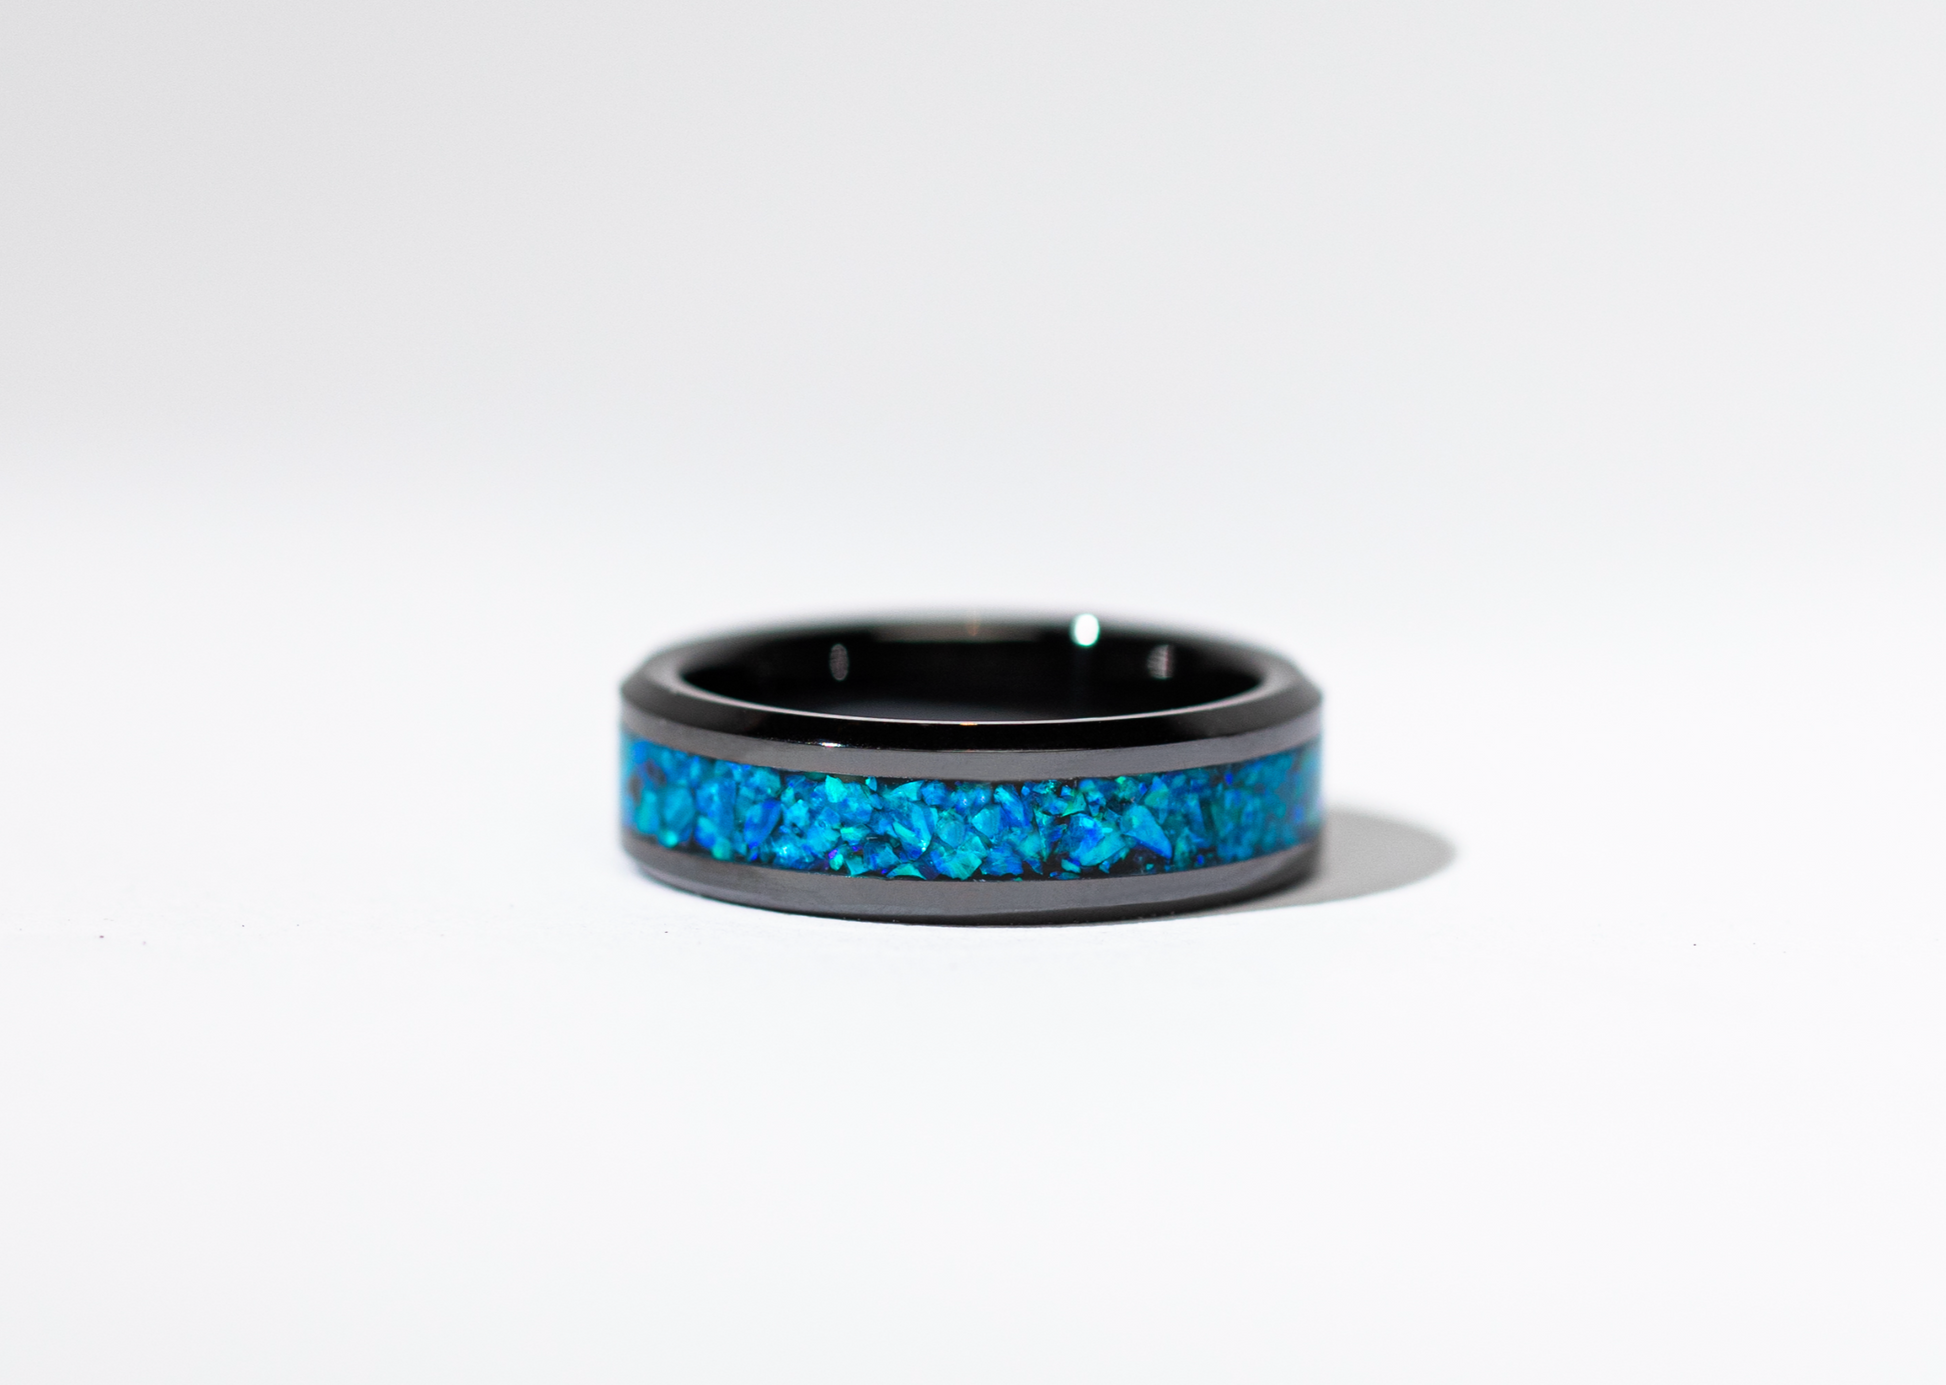 Ocean Blue Opal on Black Ceramic Cremation Ring Singapore